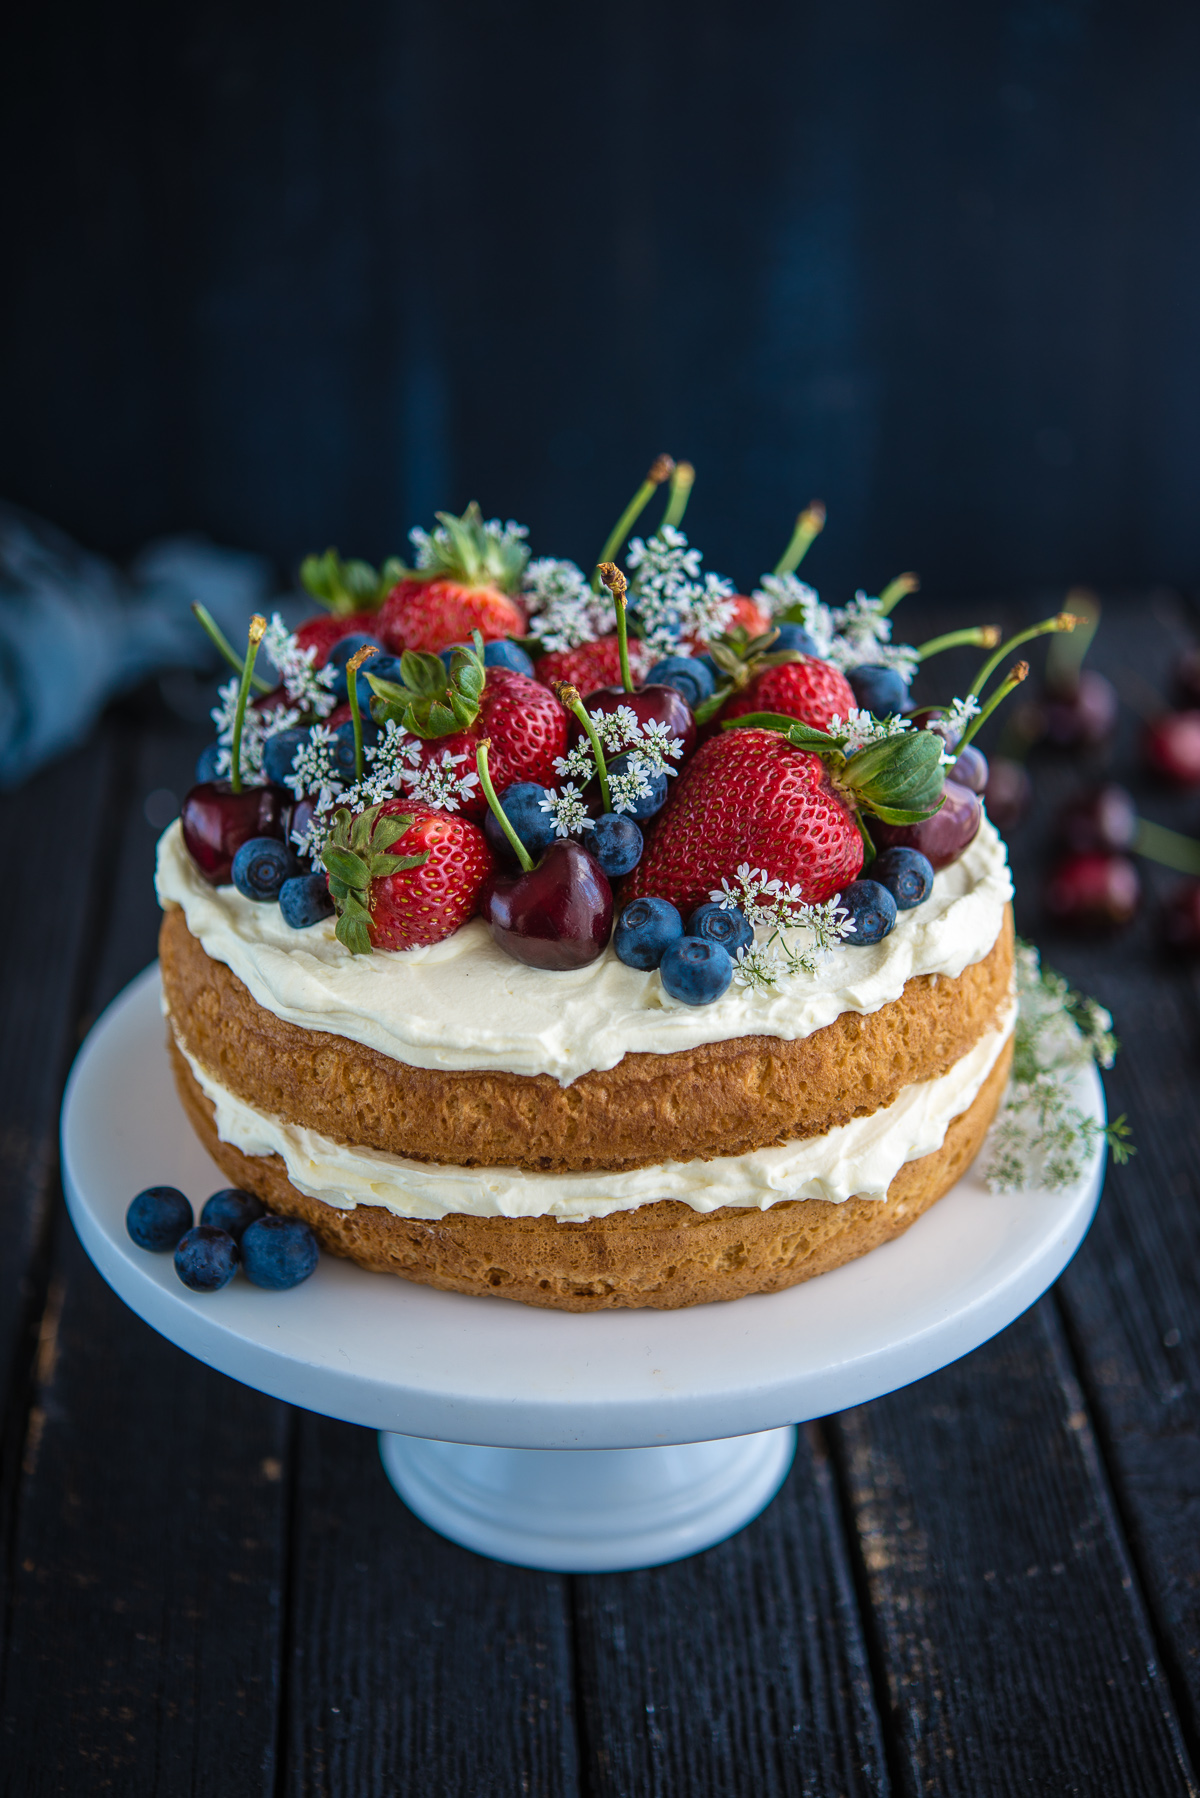 Sponge Cake with Berries and Cherries - The Hungry Australian